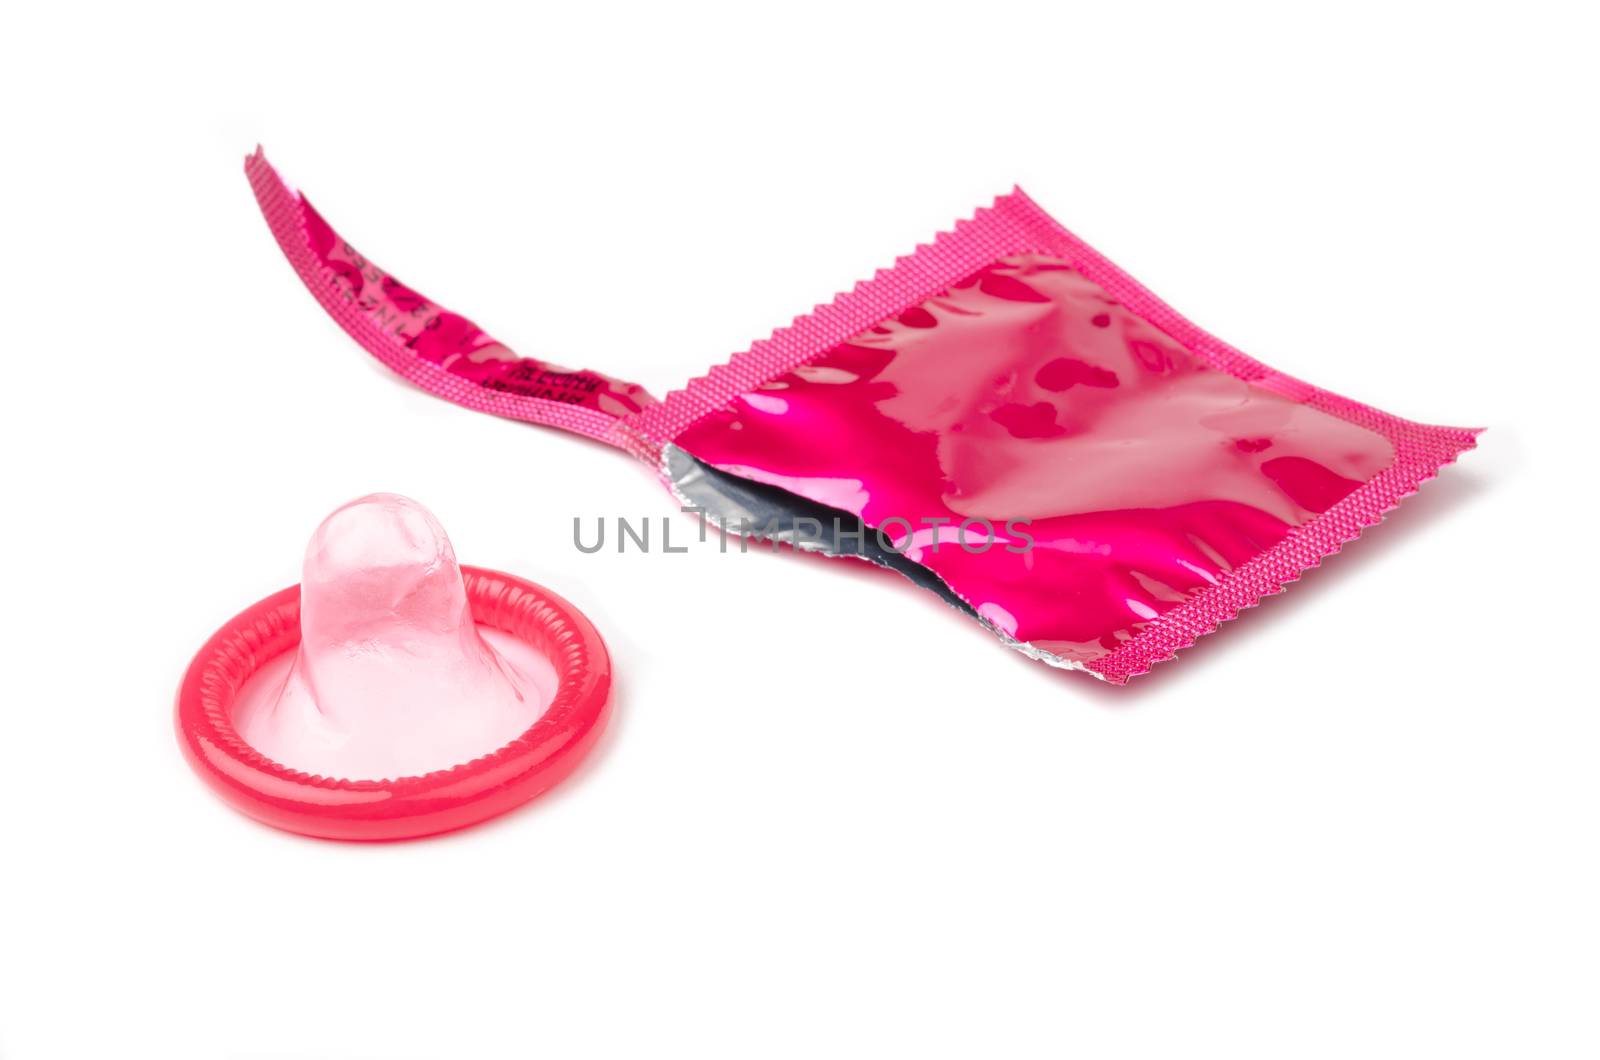 Condom packaging. by Gamjai